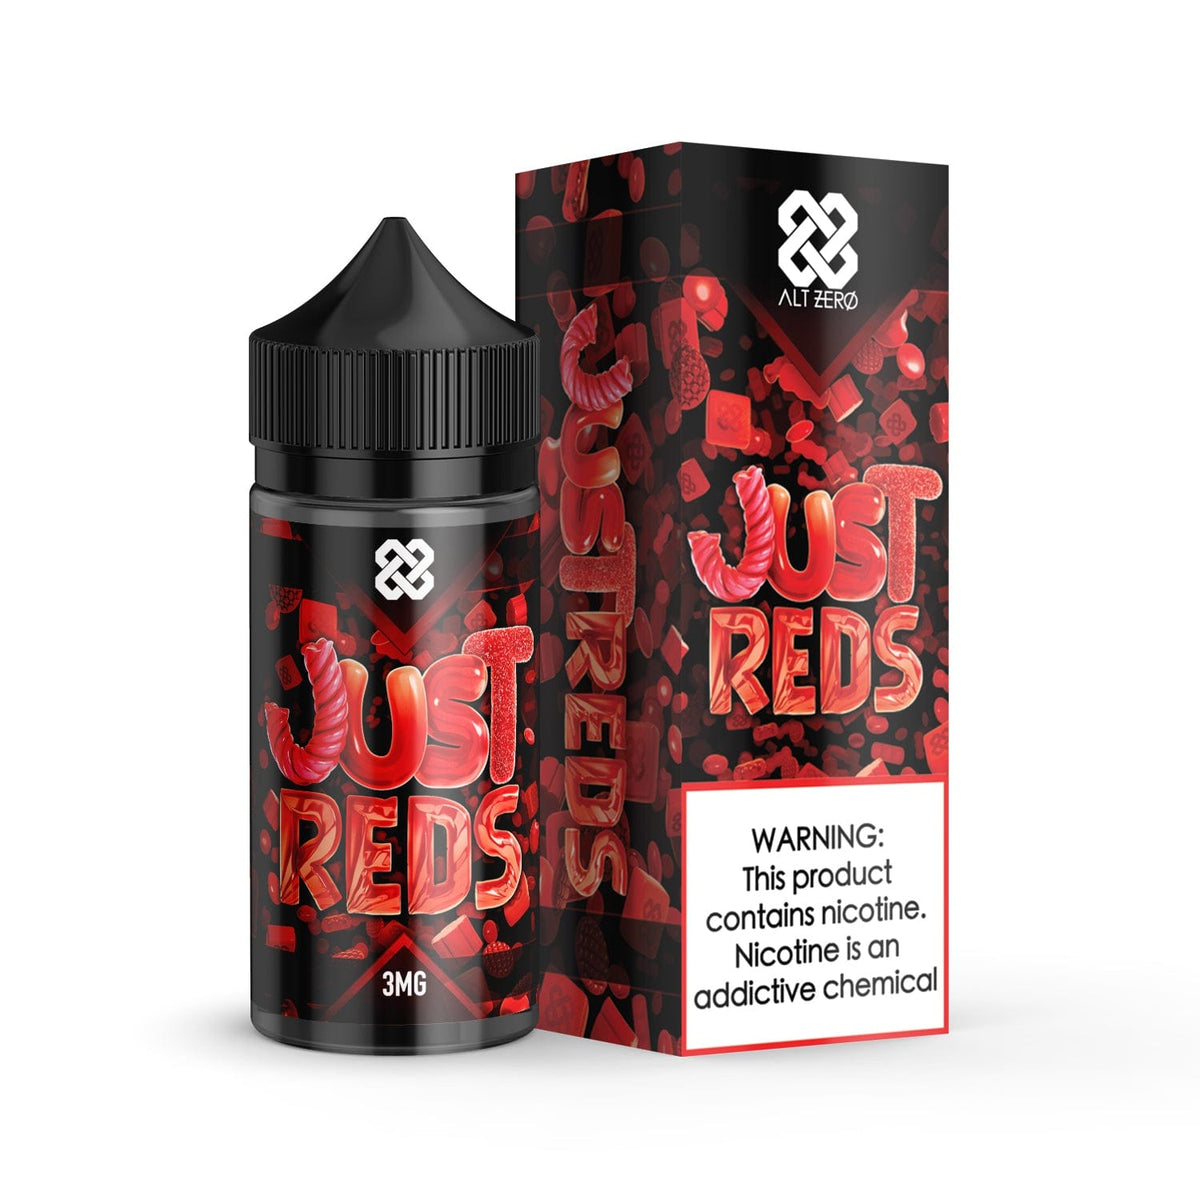 Alt Zero's Just Reds eLiquid Vape Juice